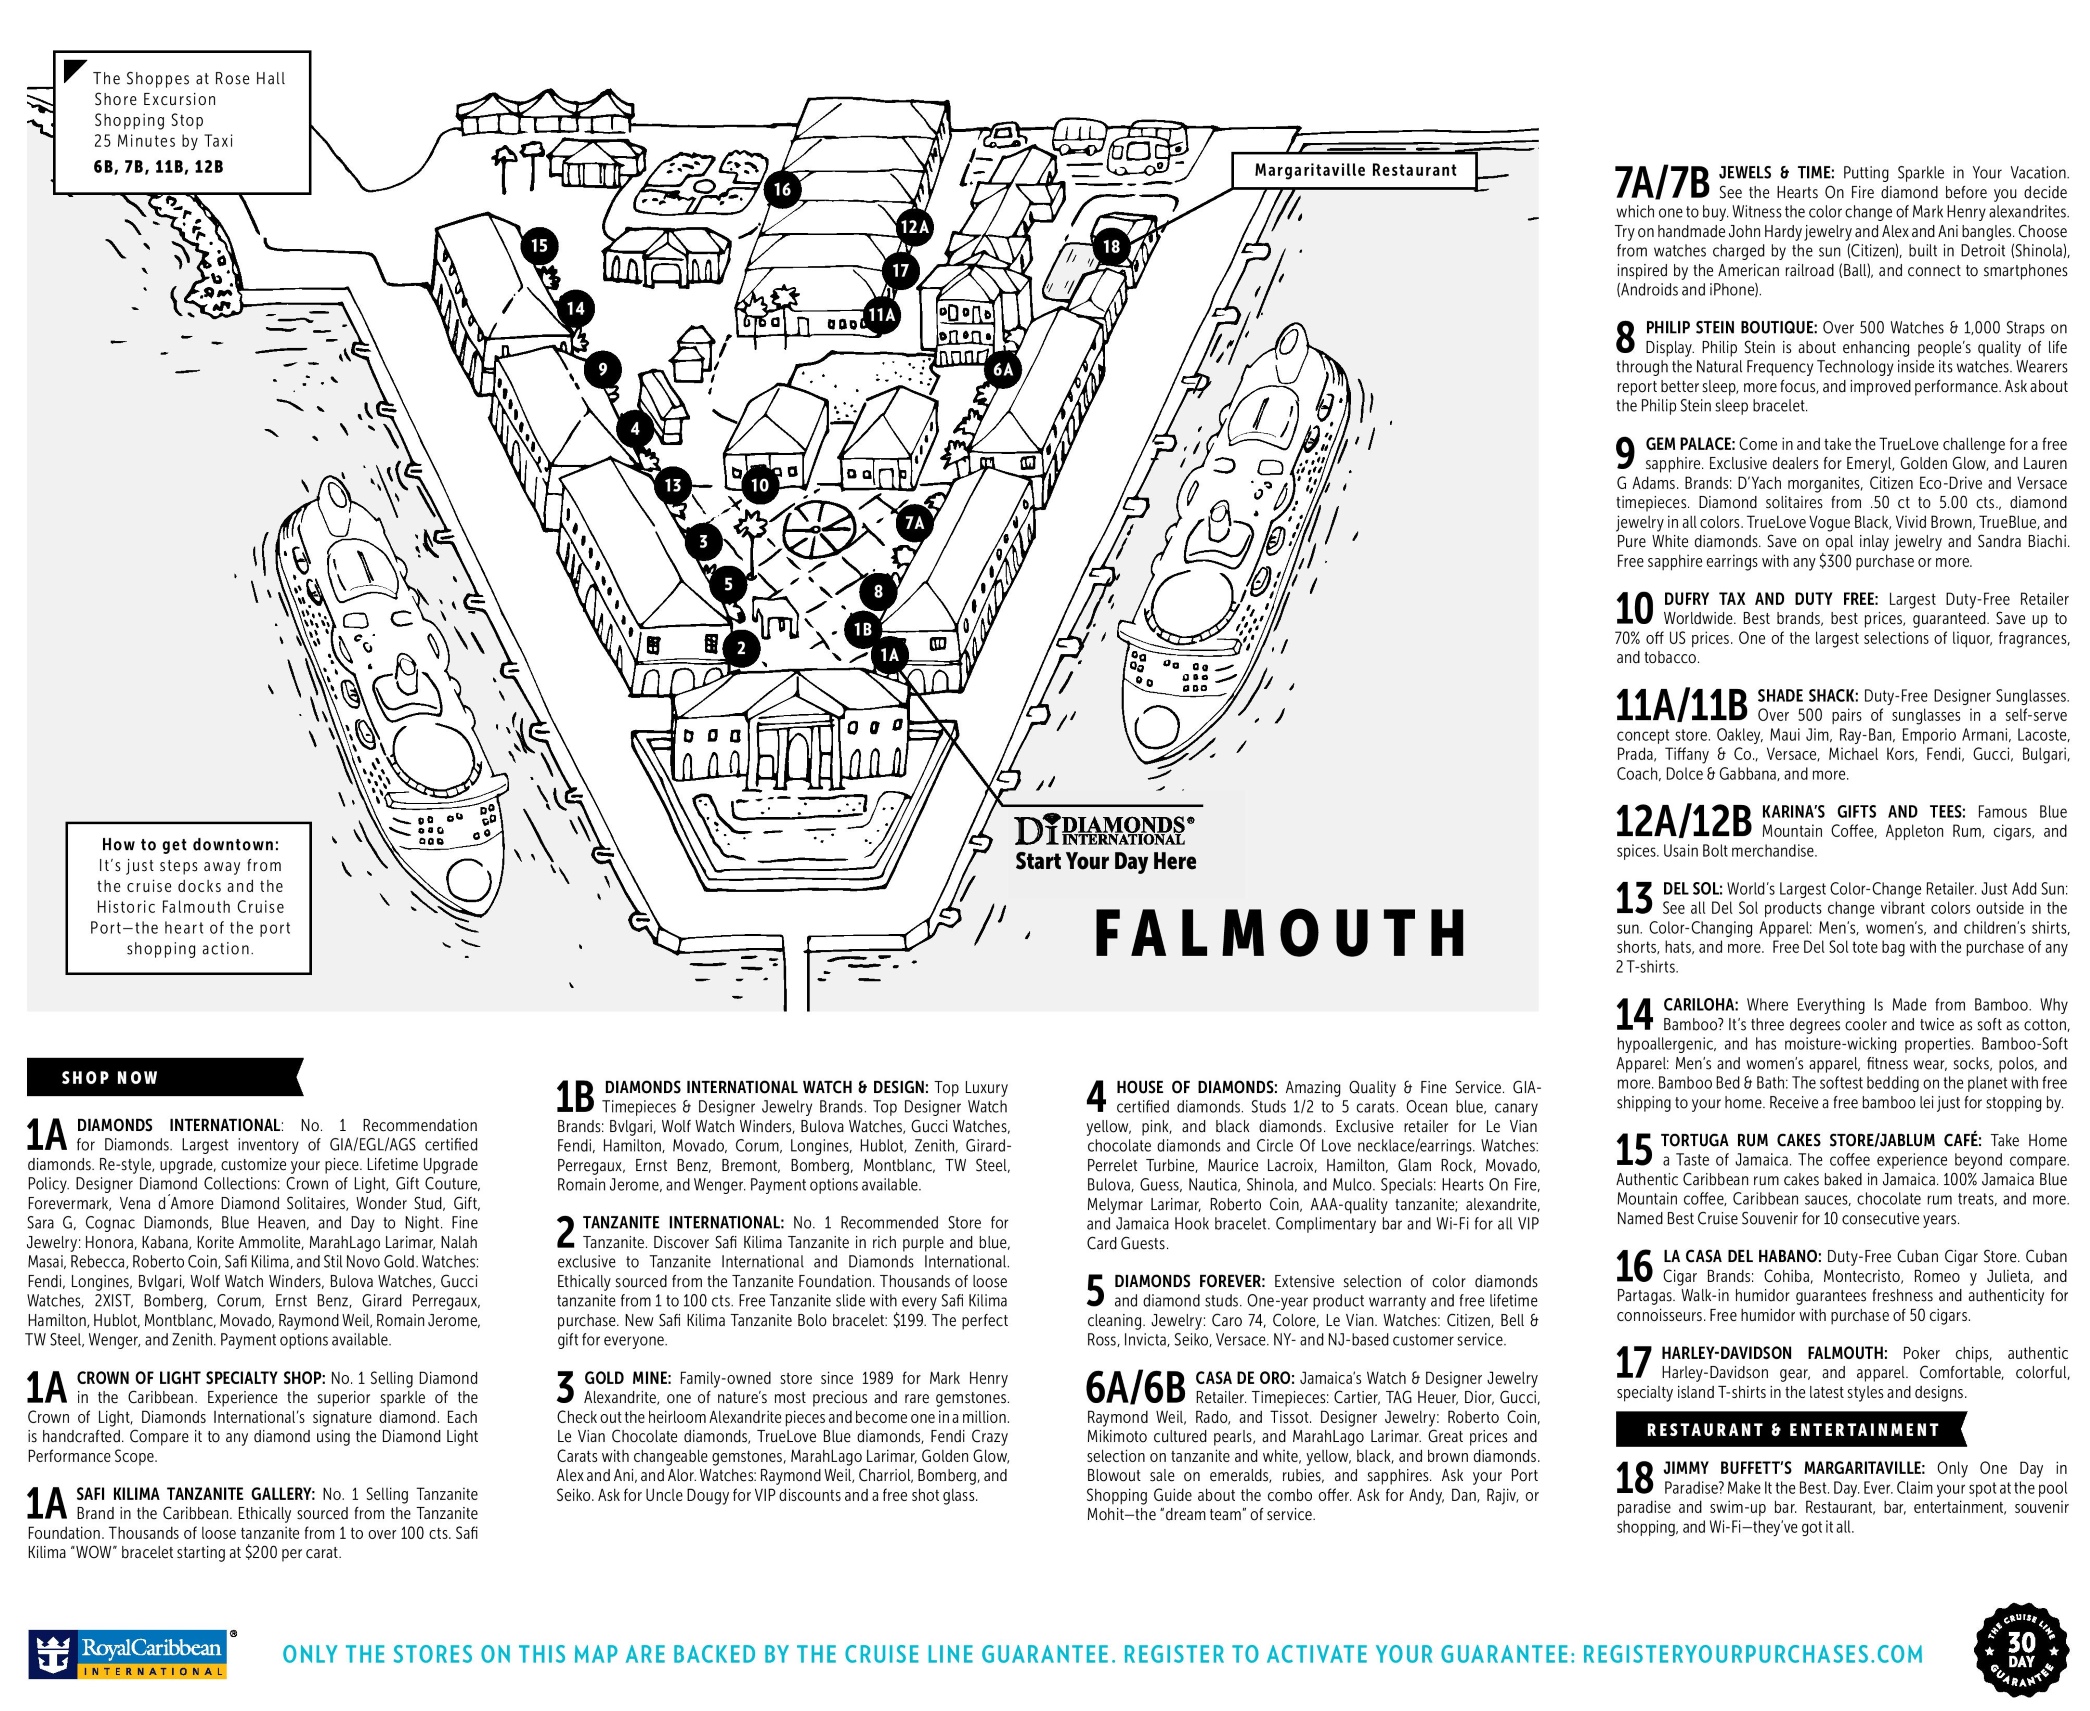 Port of Falmouth tourist map2090 x 1711